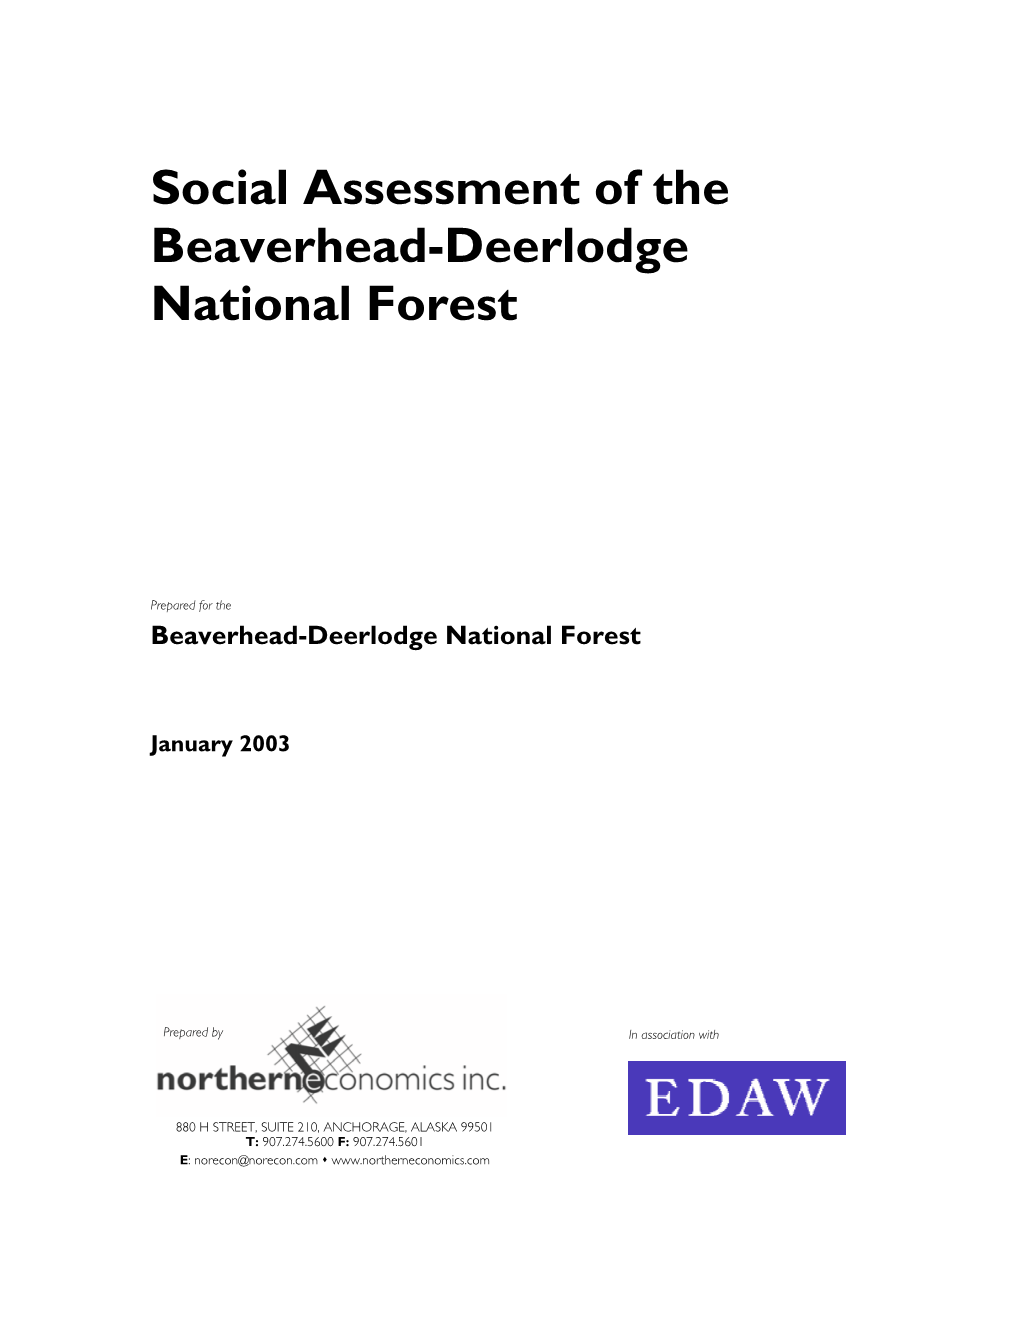 Social Assessment of the Beaverhead-Deerlodge National Forest